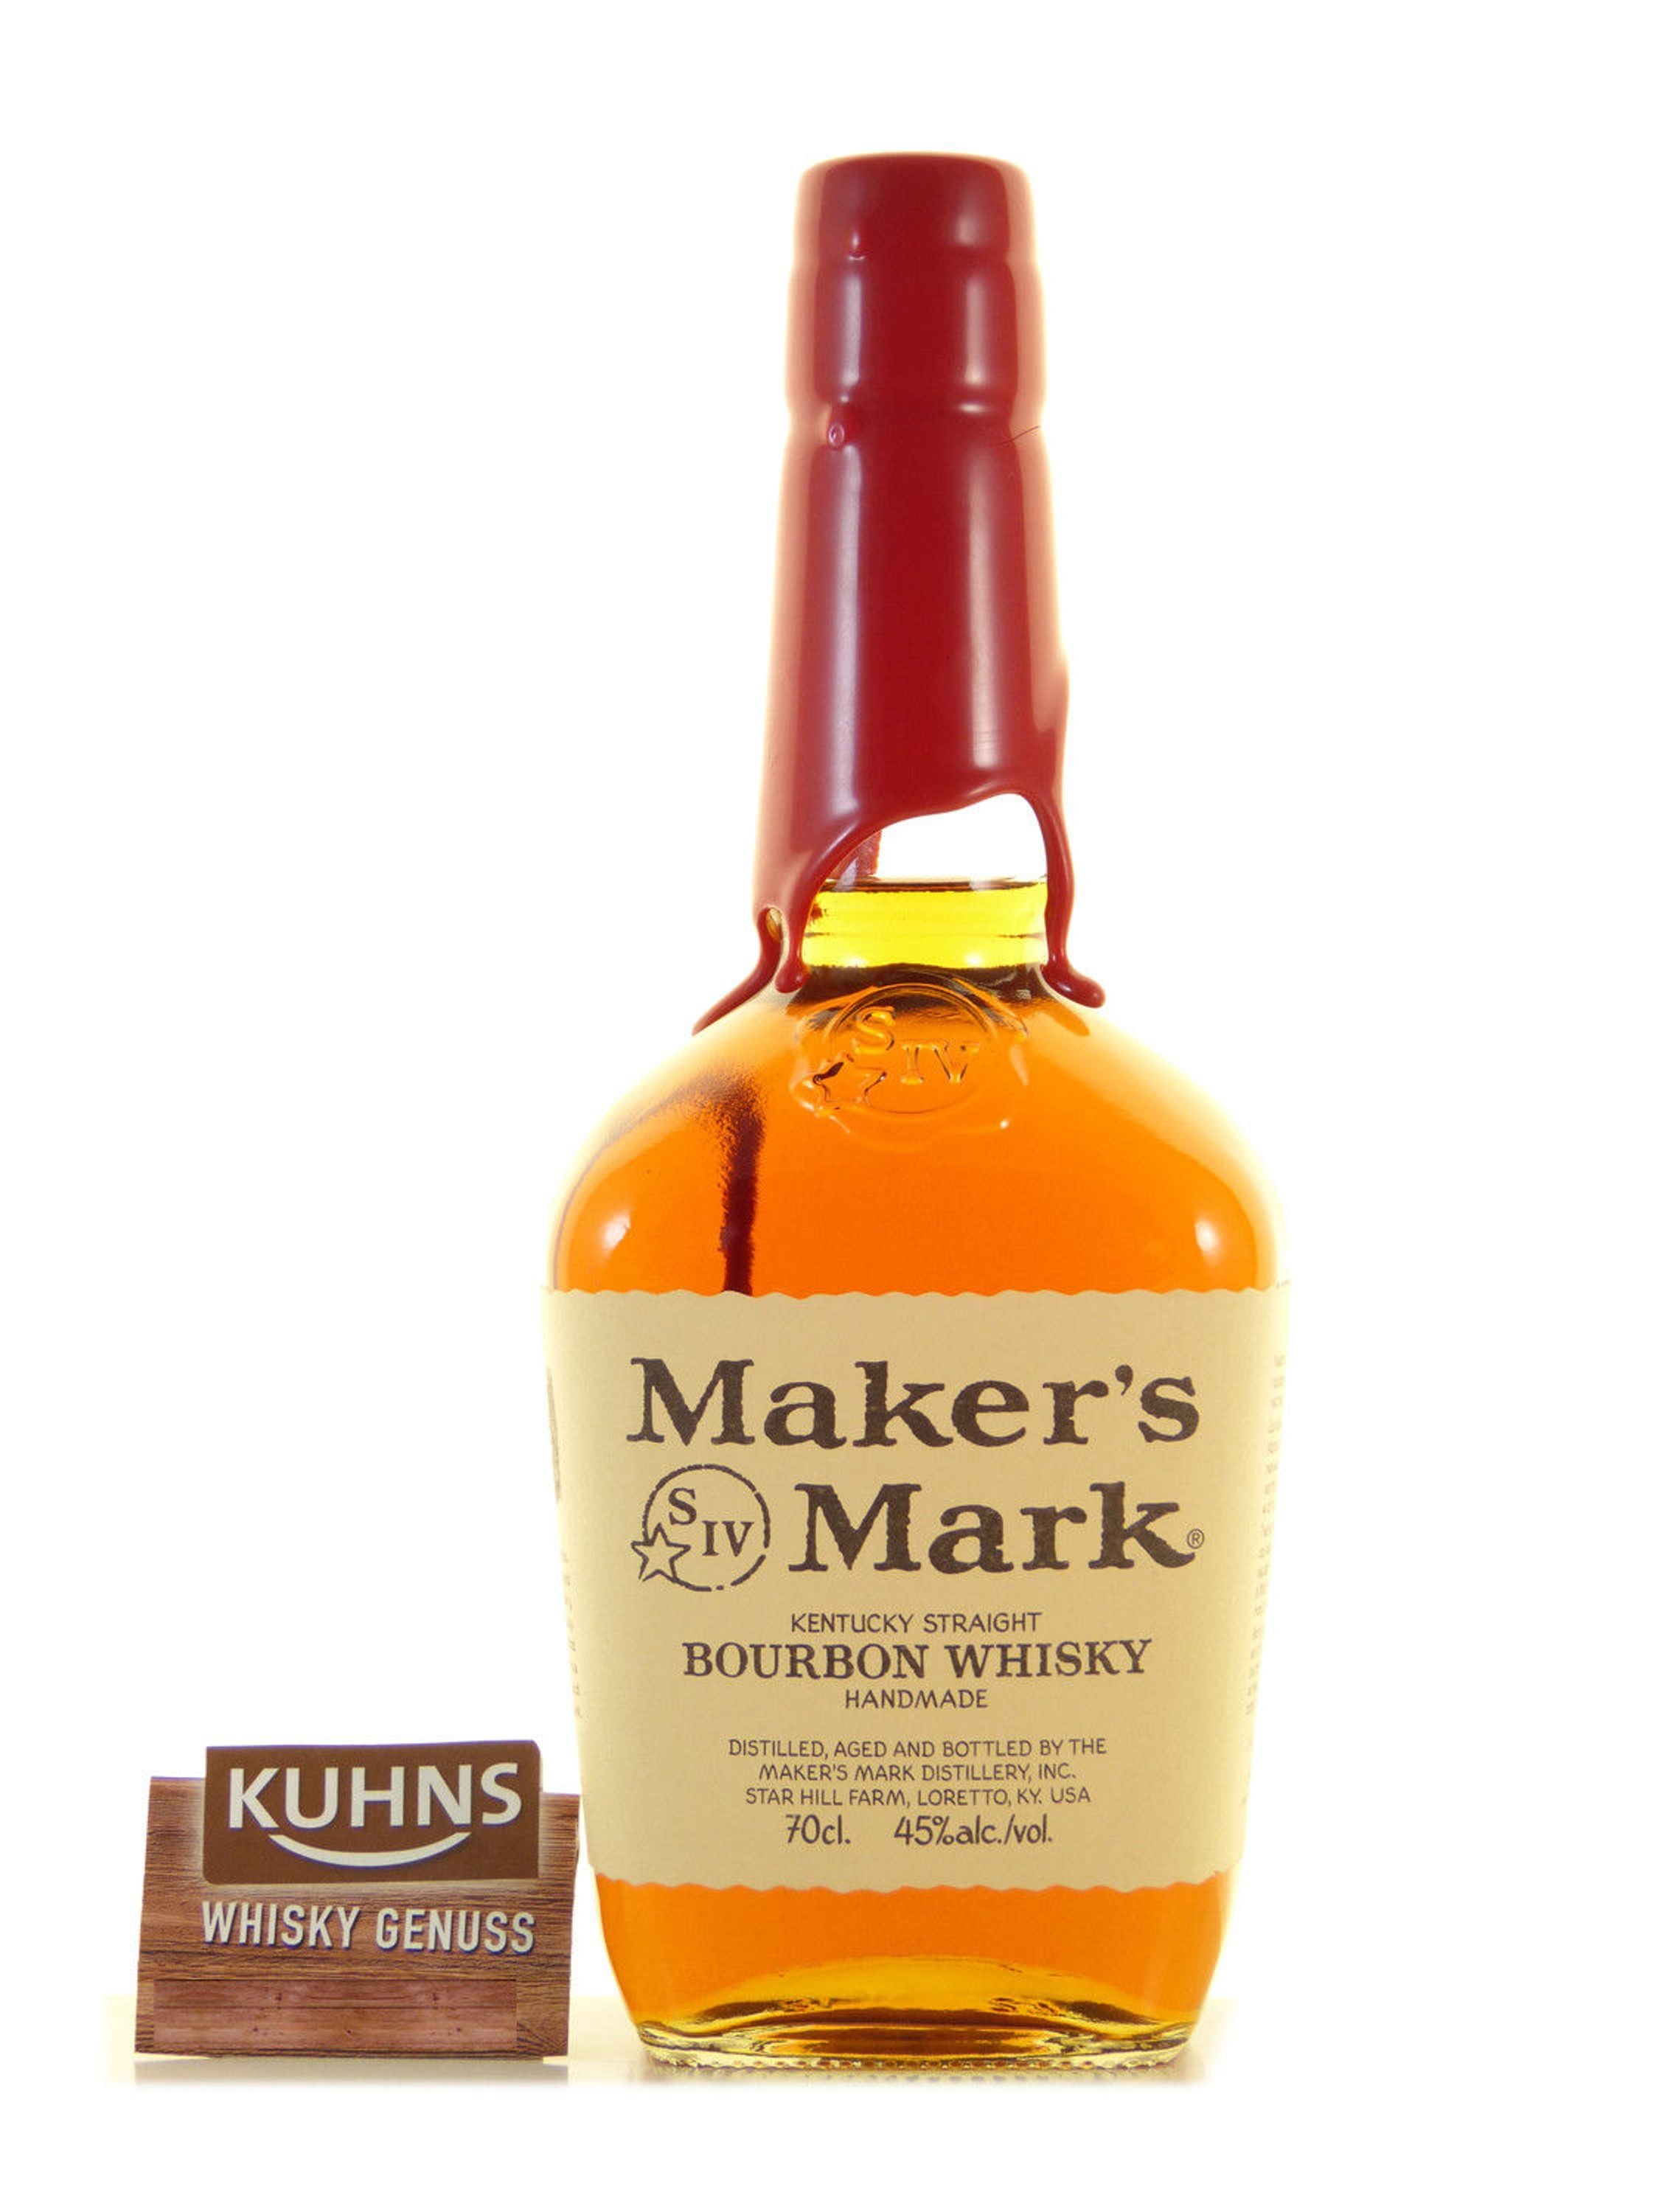 Maker's Mark Kentucky Straight Bourbon Whiskey 0.7l, alc. 45% by volume